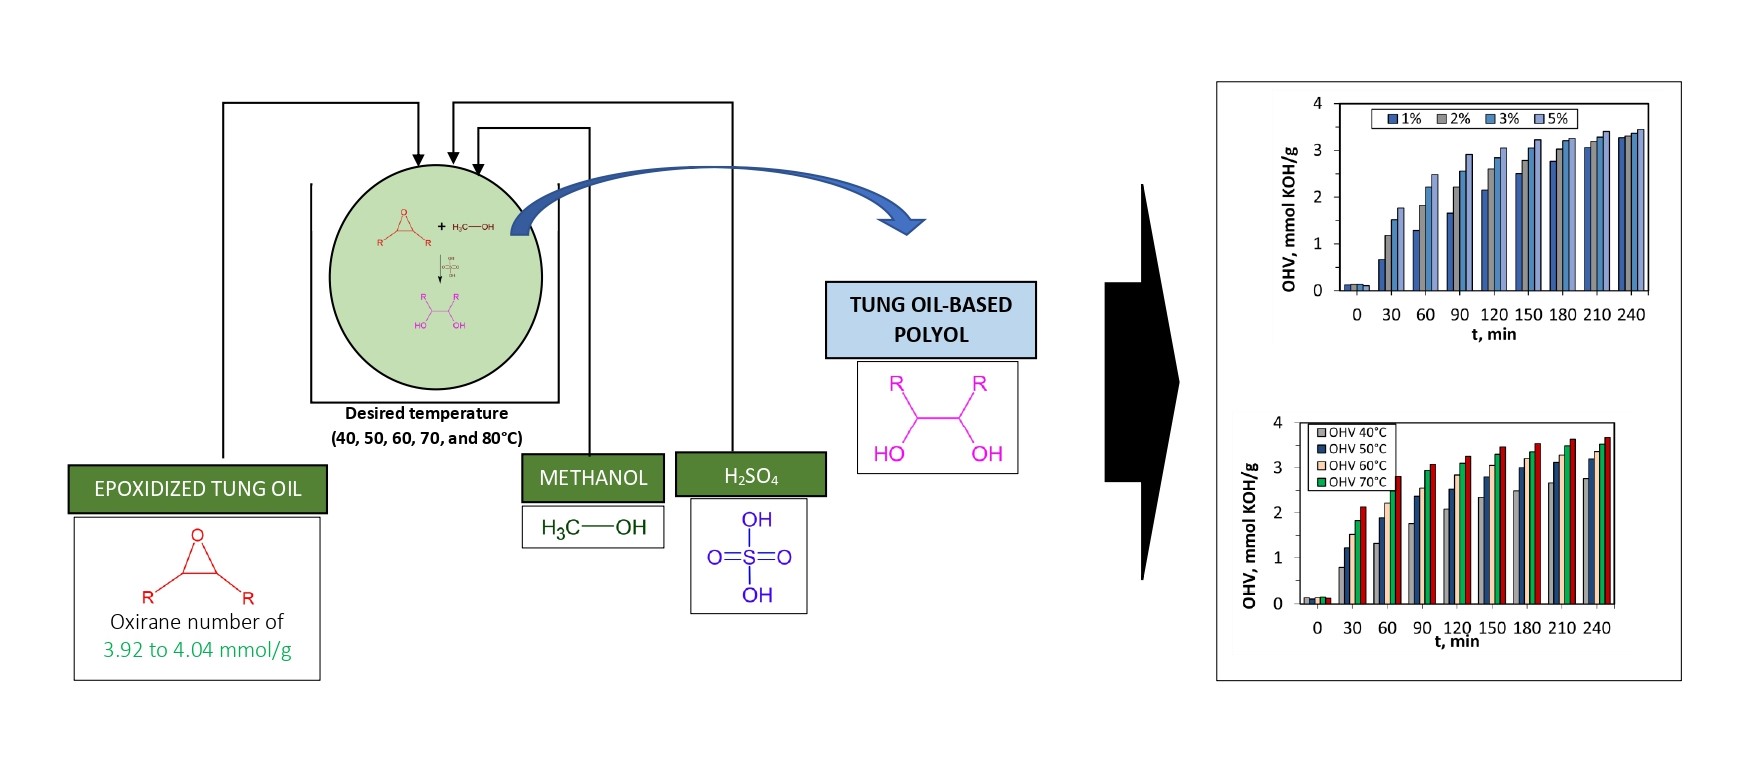 Hydroxylation Kinetics of Epoxidized Tung Oil Using Methanol as Nucleophilic Agent